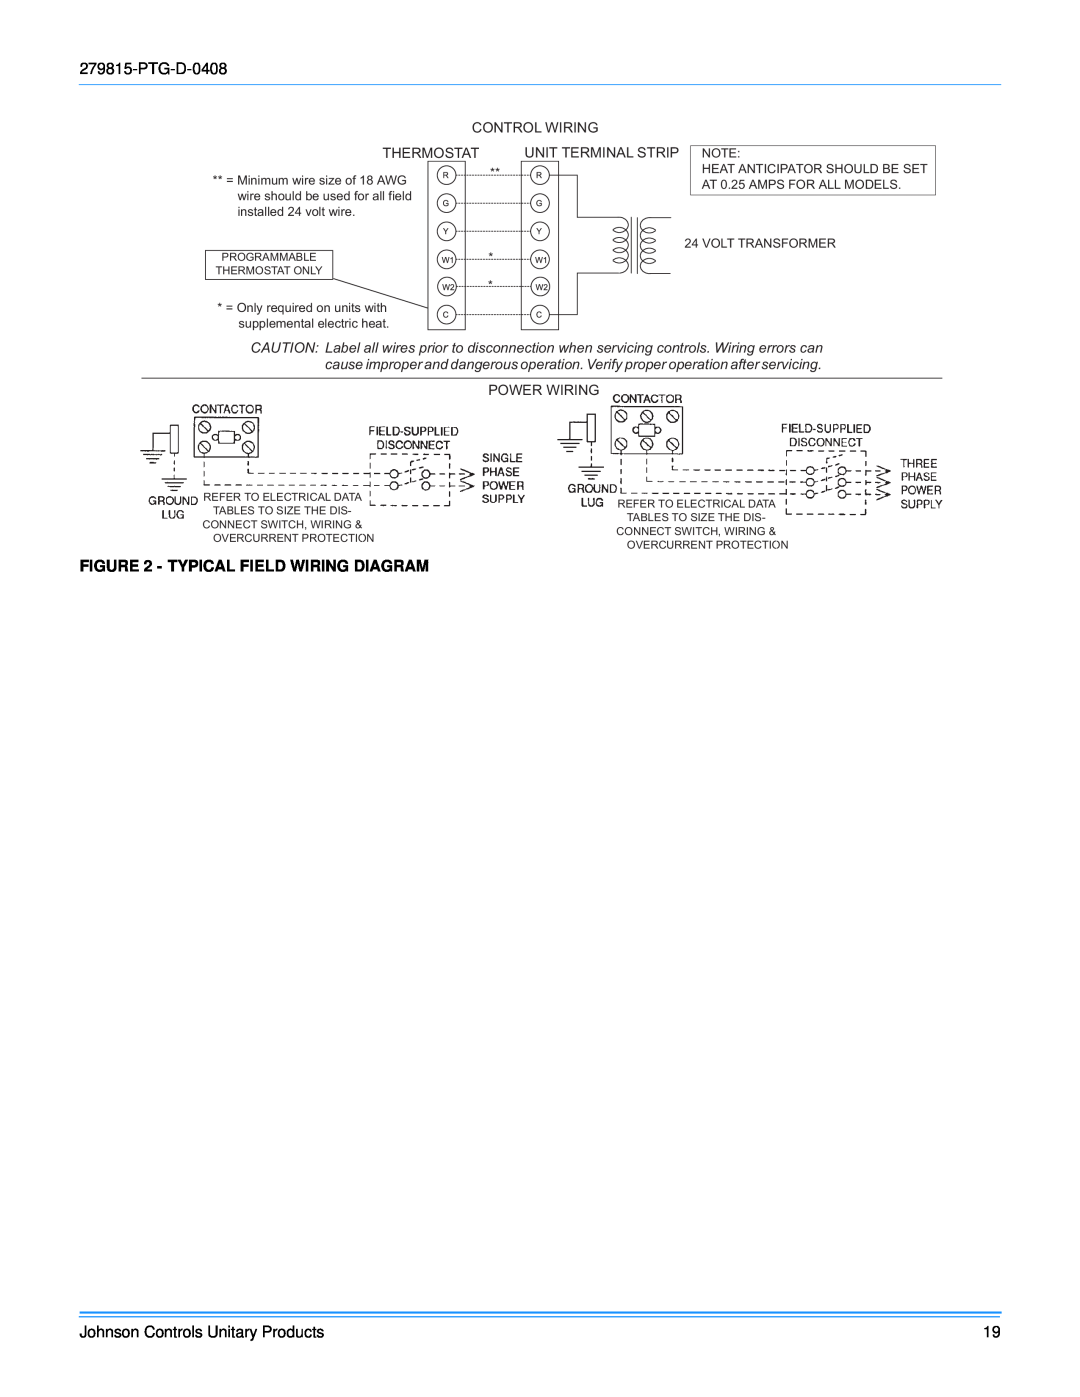 Johnson Controls ACPU024 THRU 060 manual PTG-D-0408, Typical Field Wiring Diagram, Johnson Controls Unitary Products 